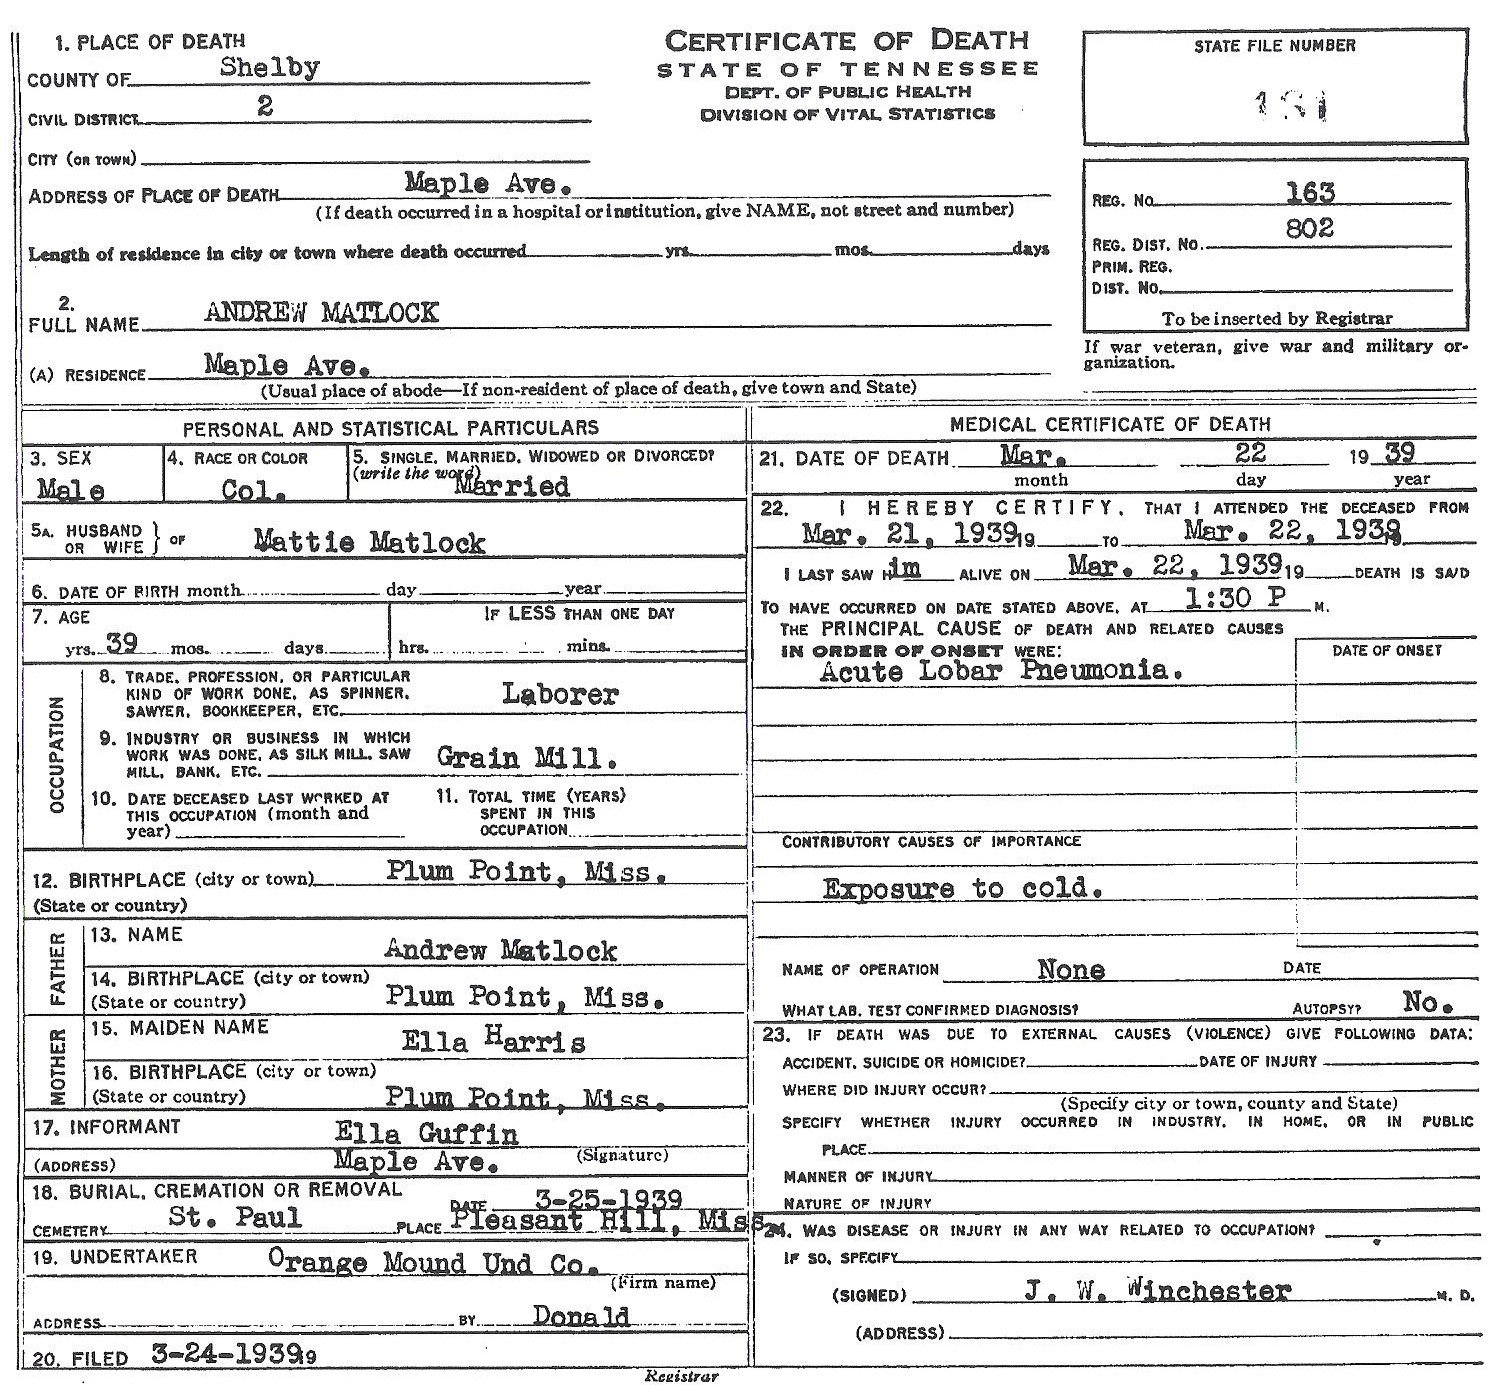 Andrew Matlock Jr.'s Death Certificate